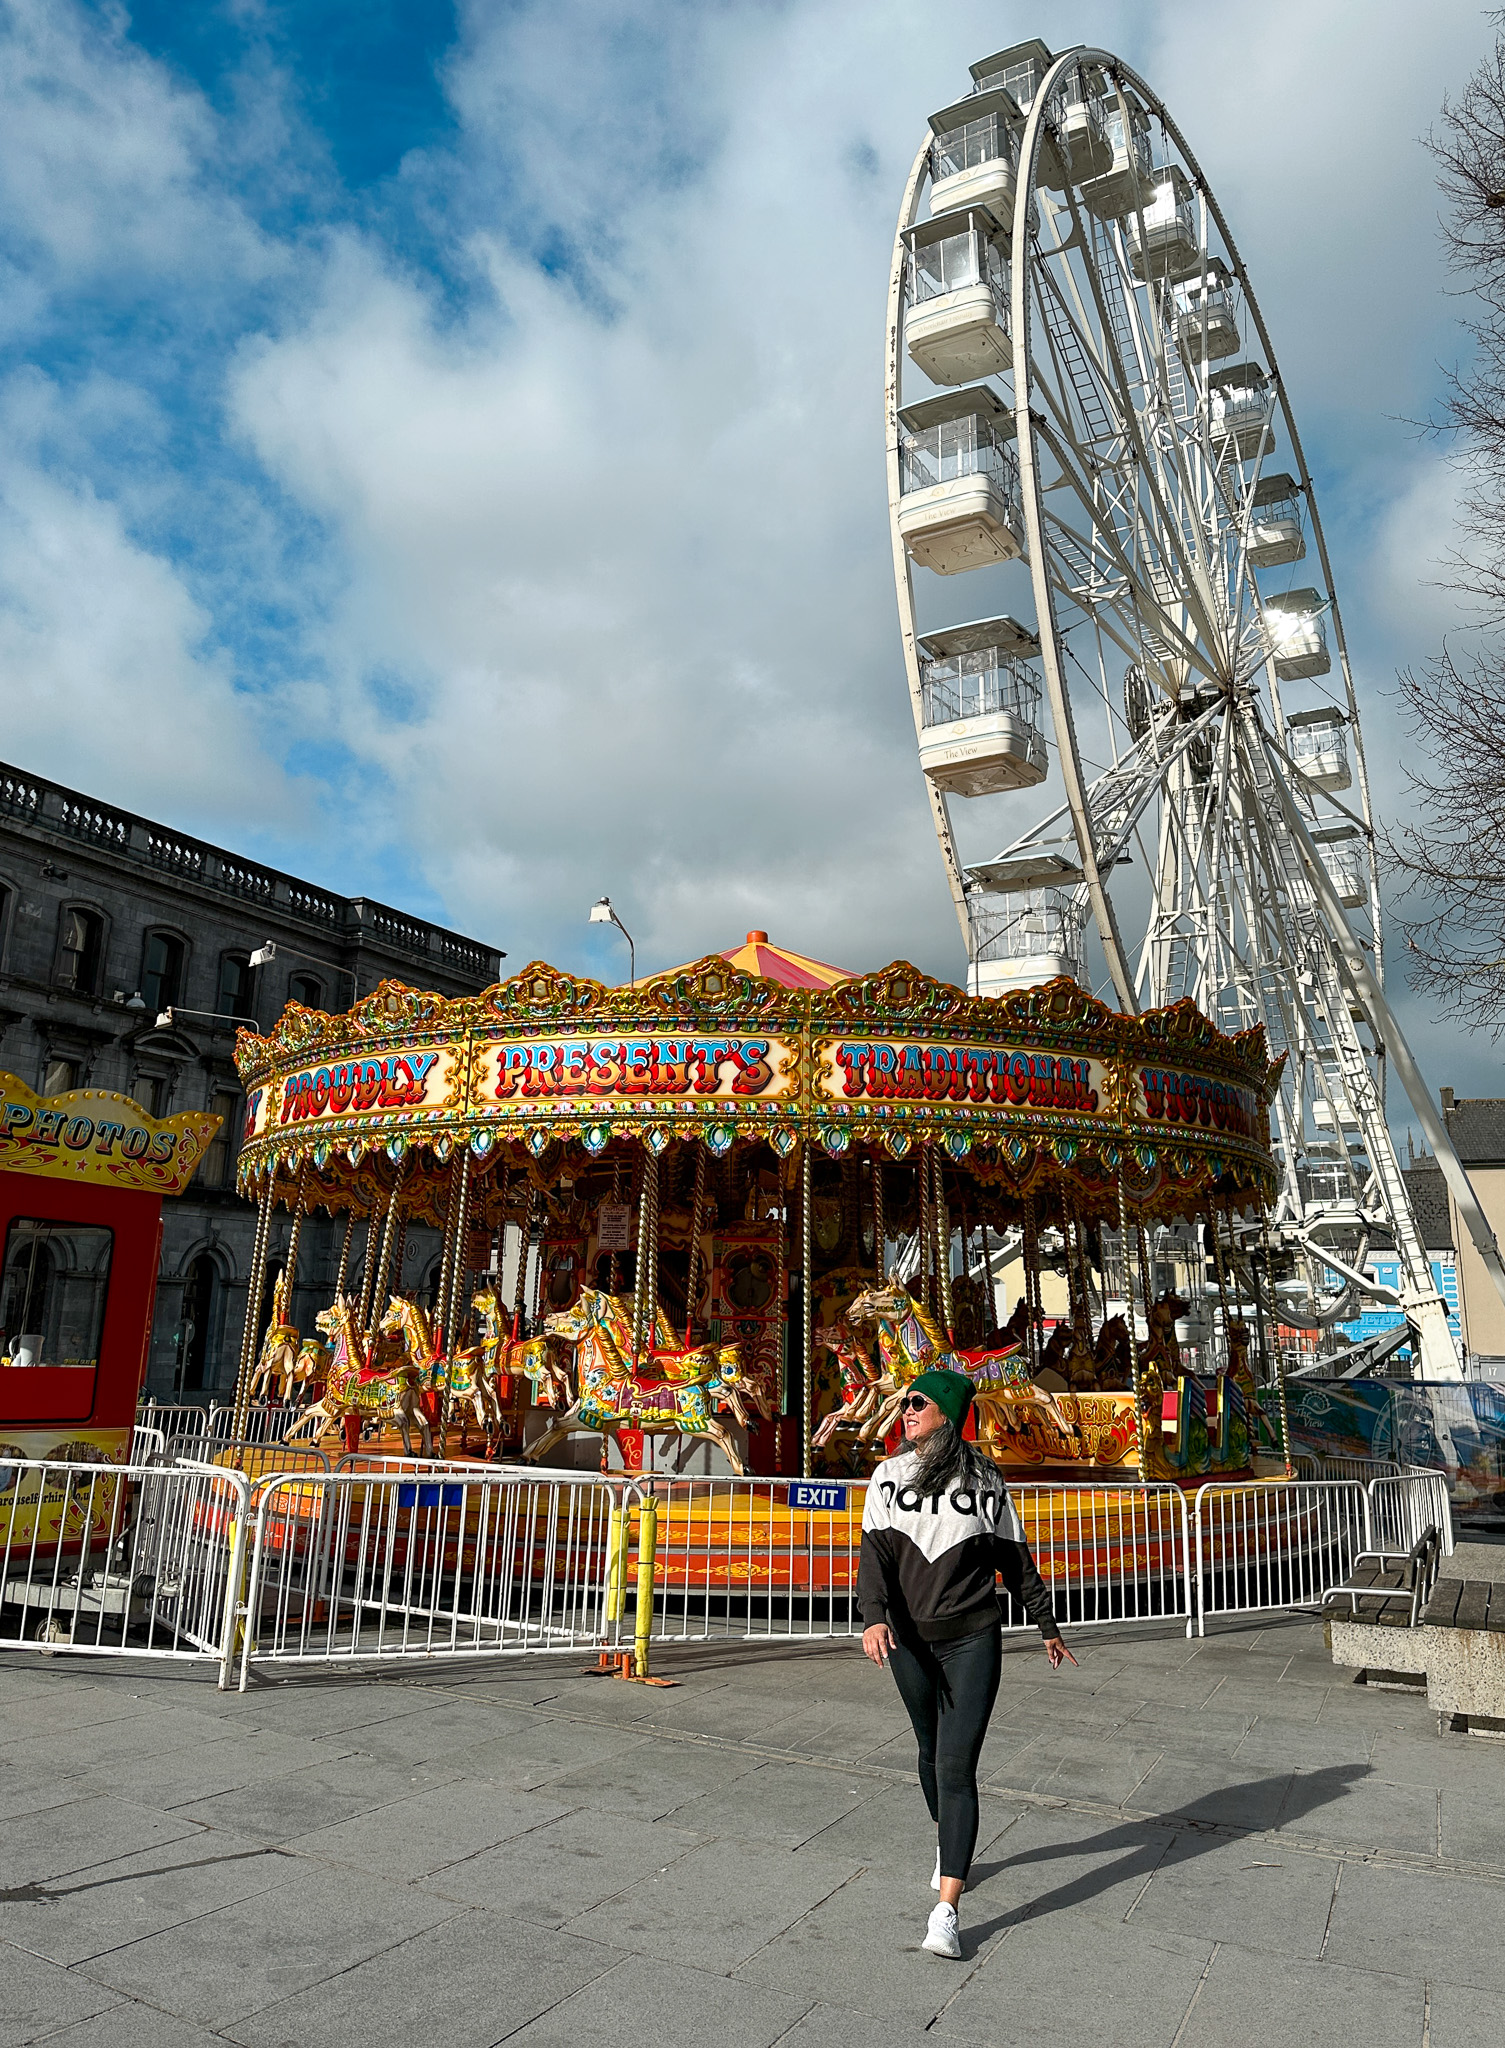 Ferris Wheel and Merry Go Round Kilkenny Ireland Marant Girlfriend Collective Under Armour Slipspeed sneakers lululemon Toque